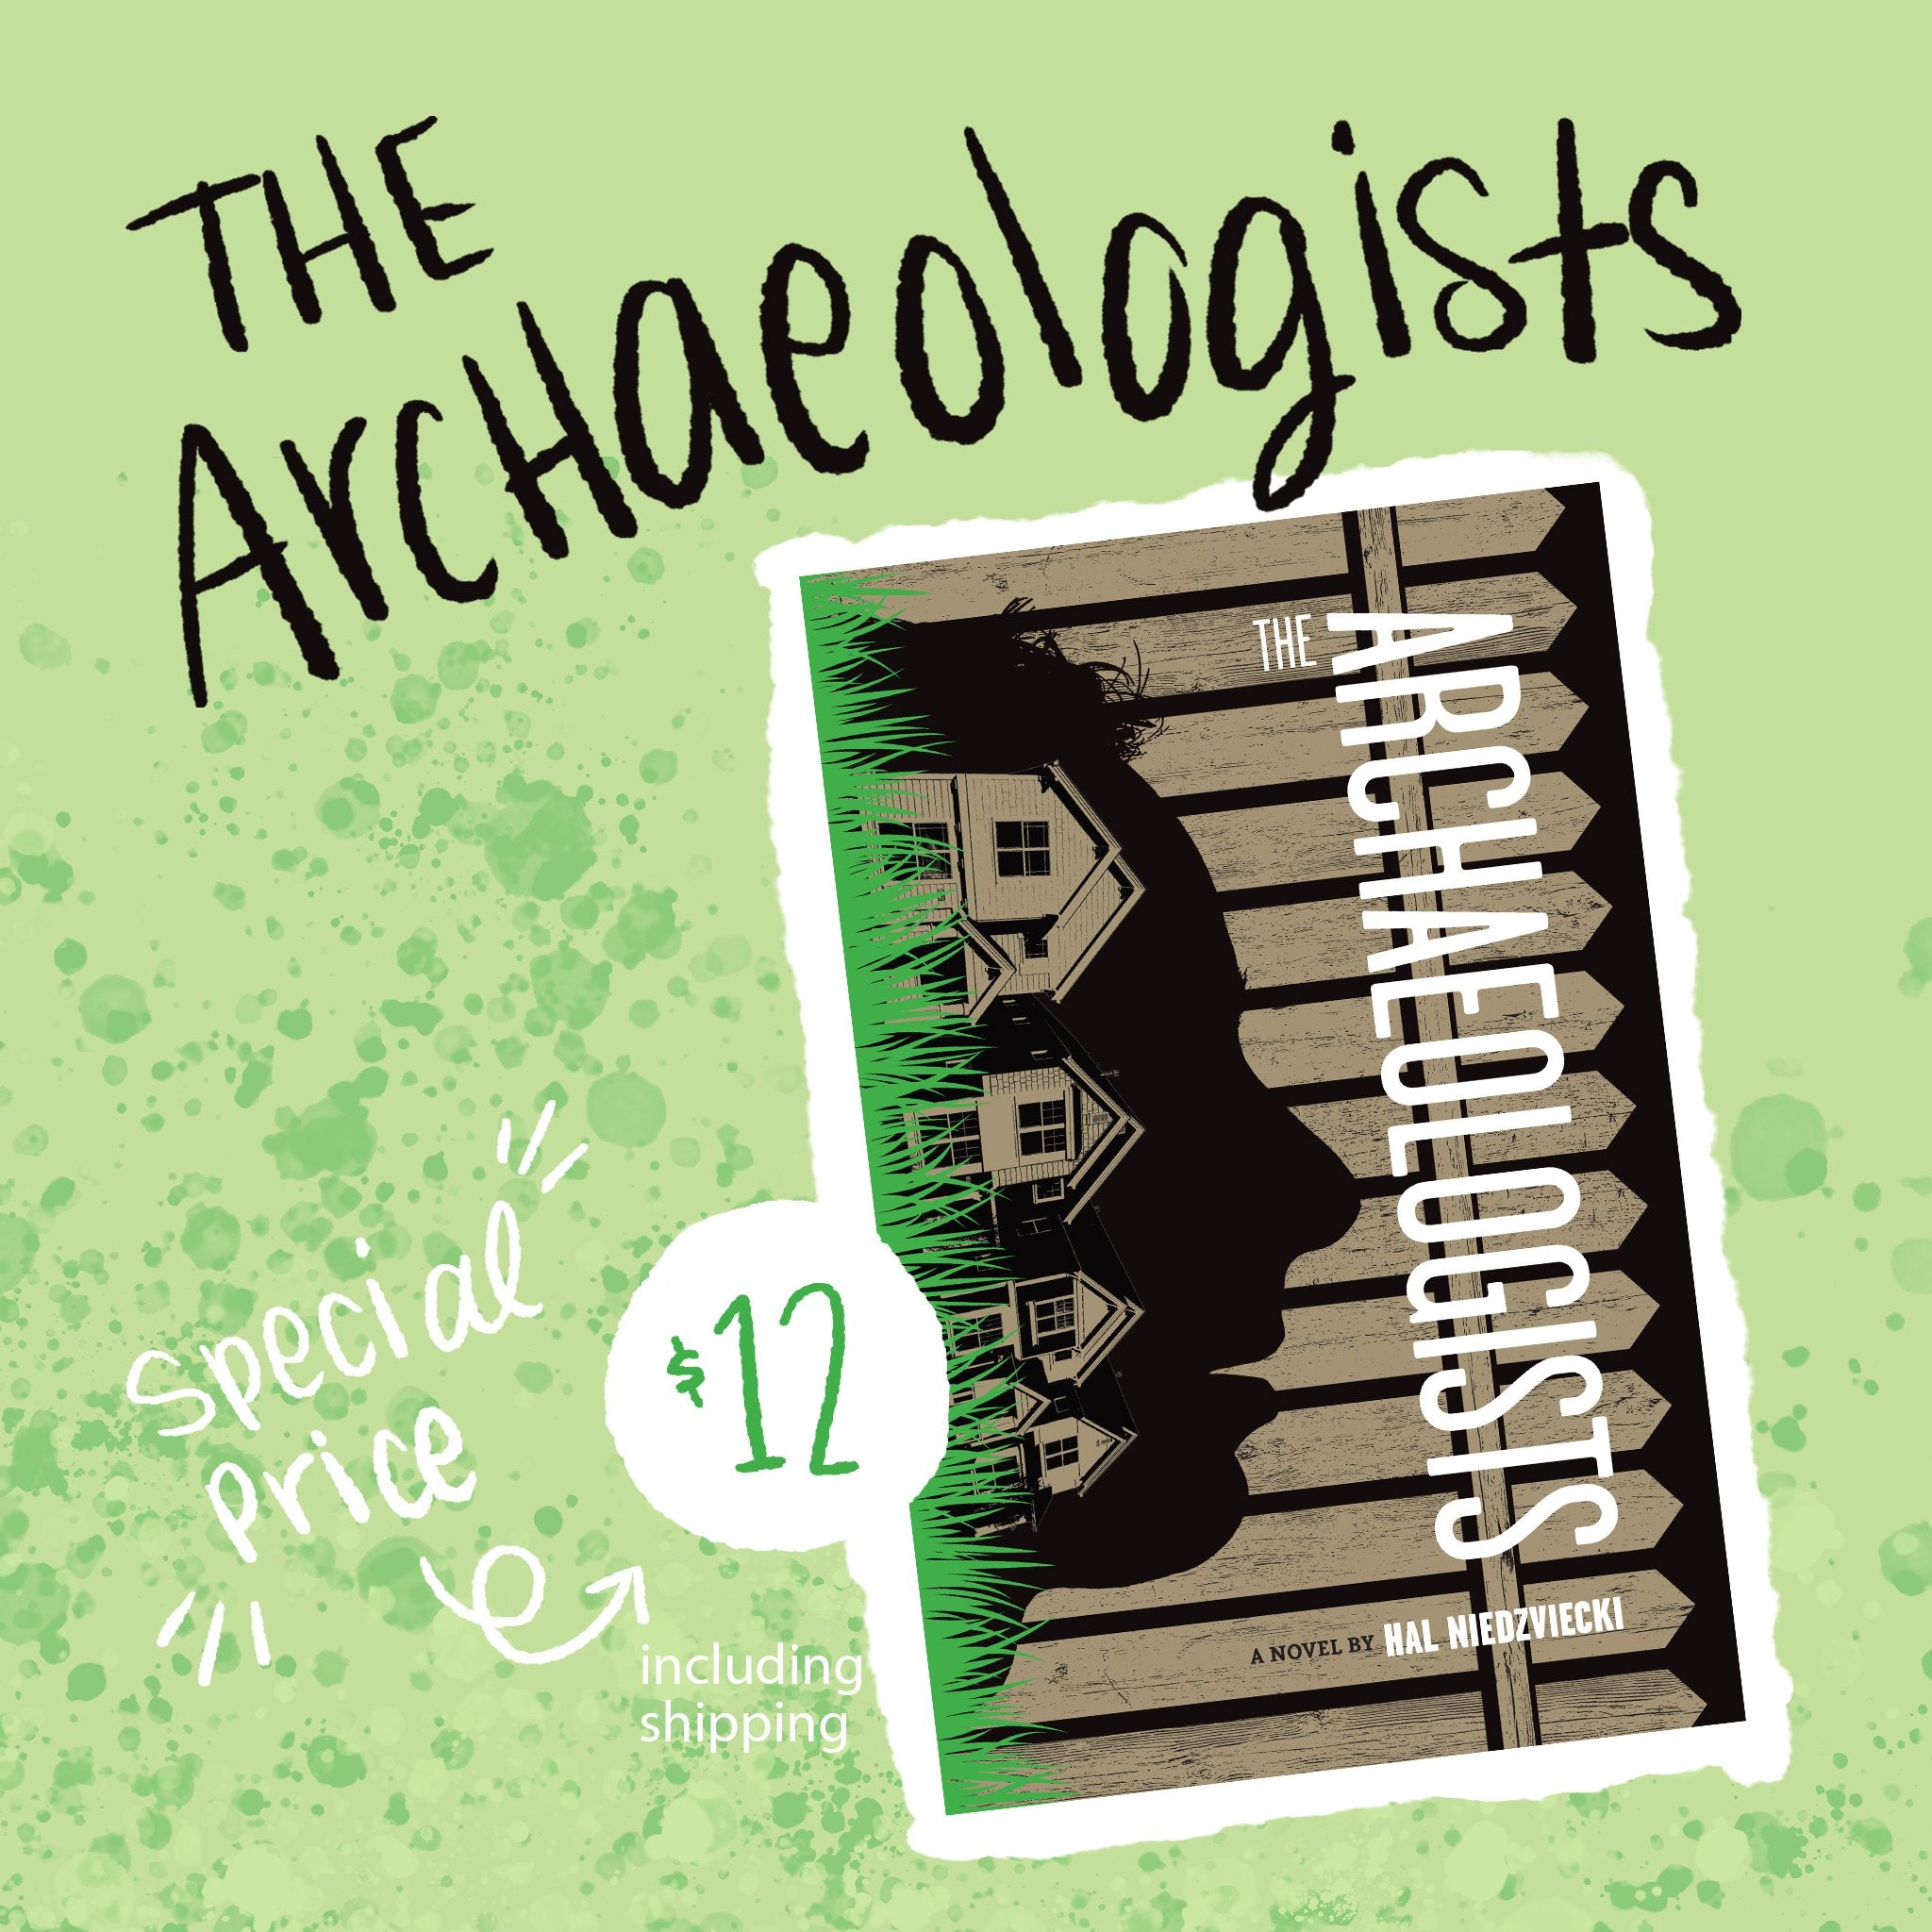 The Archaeologists, a novel